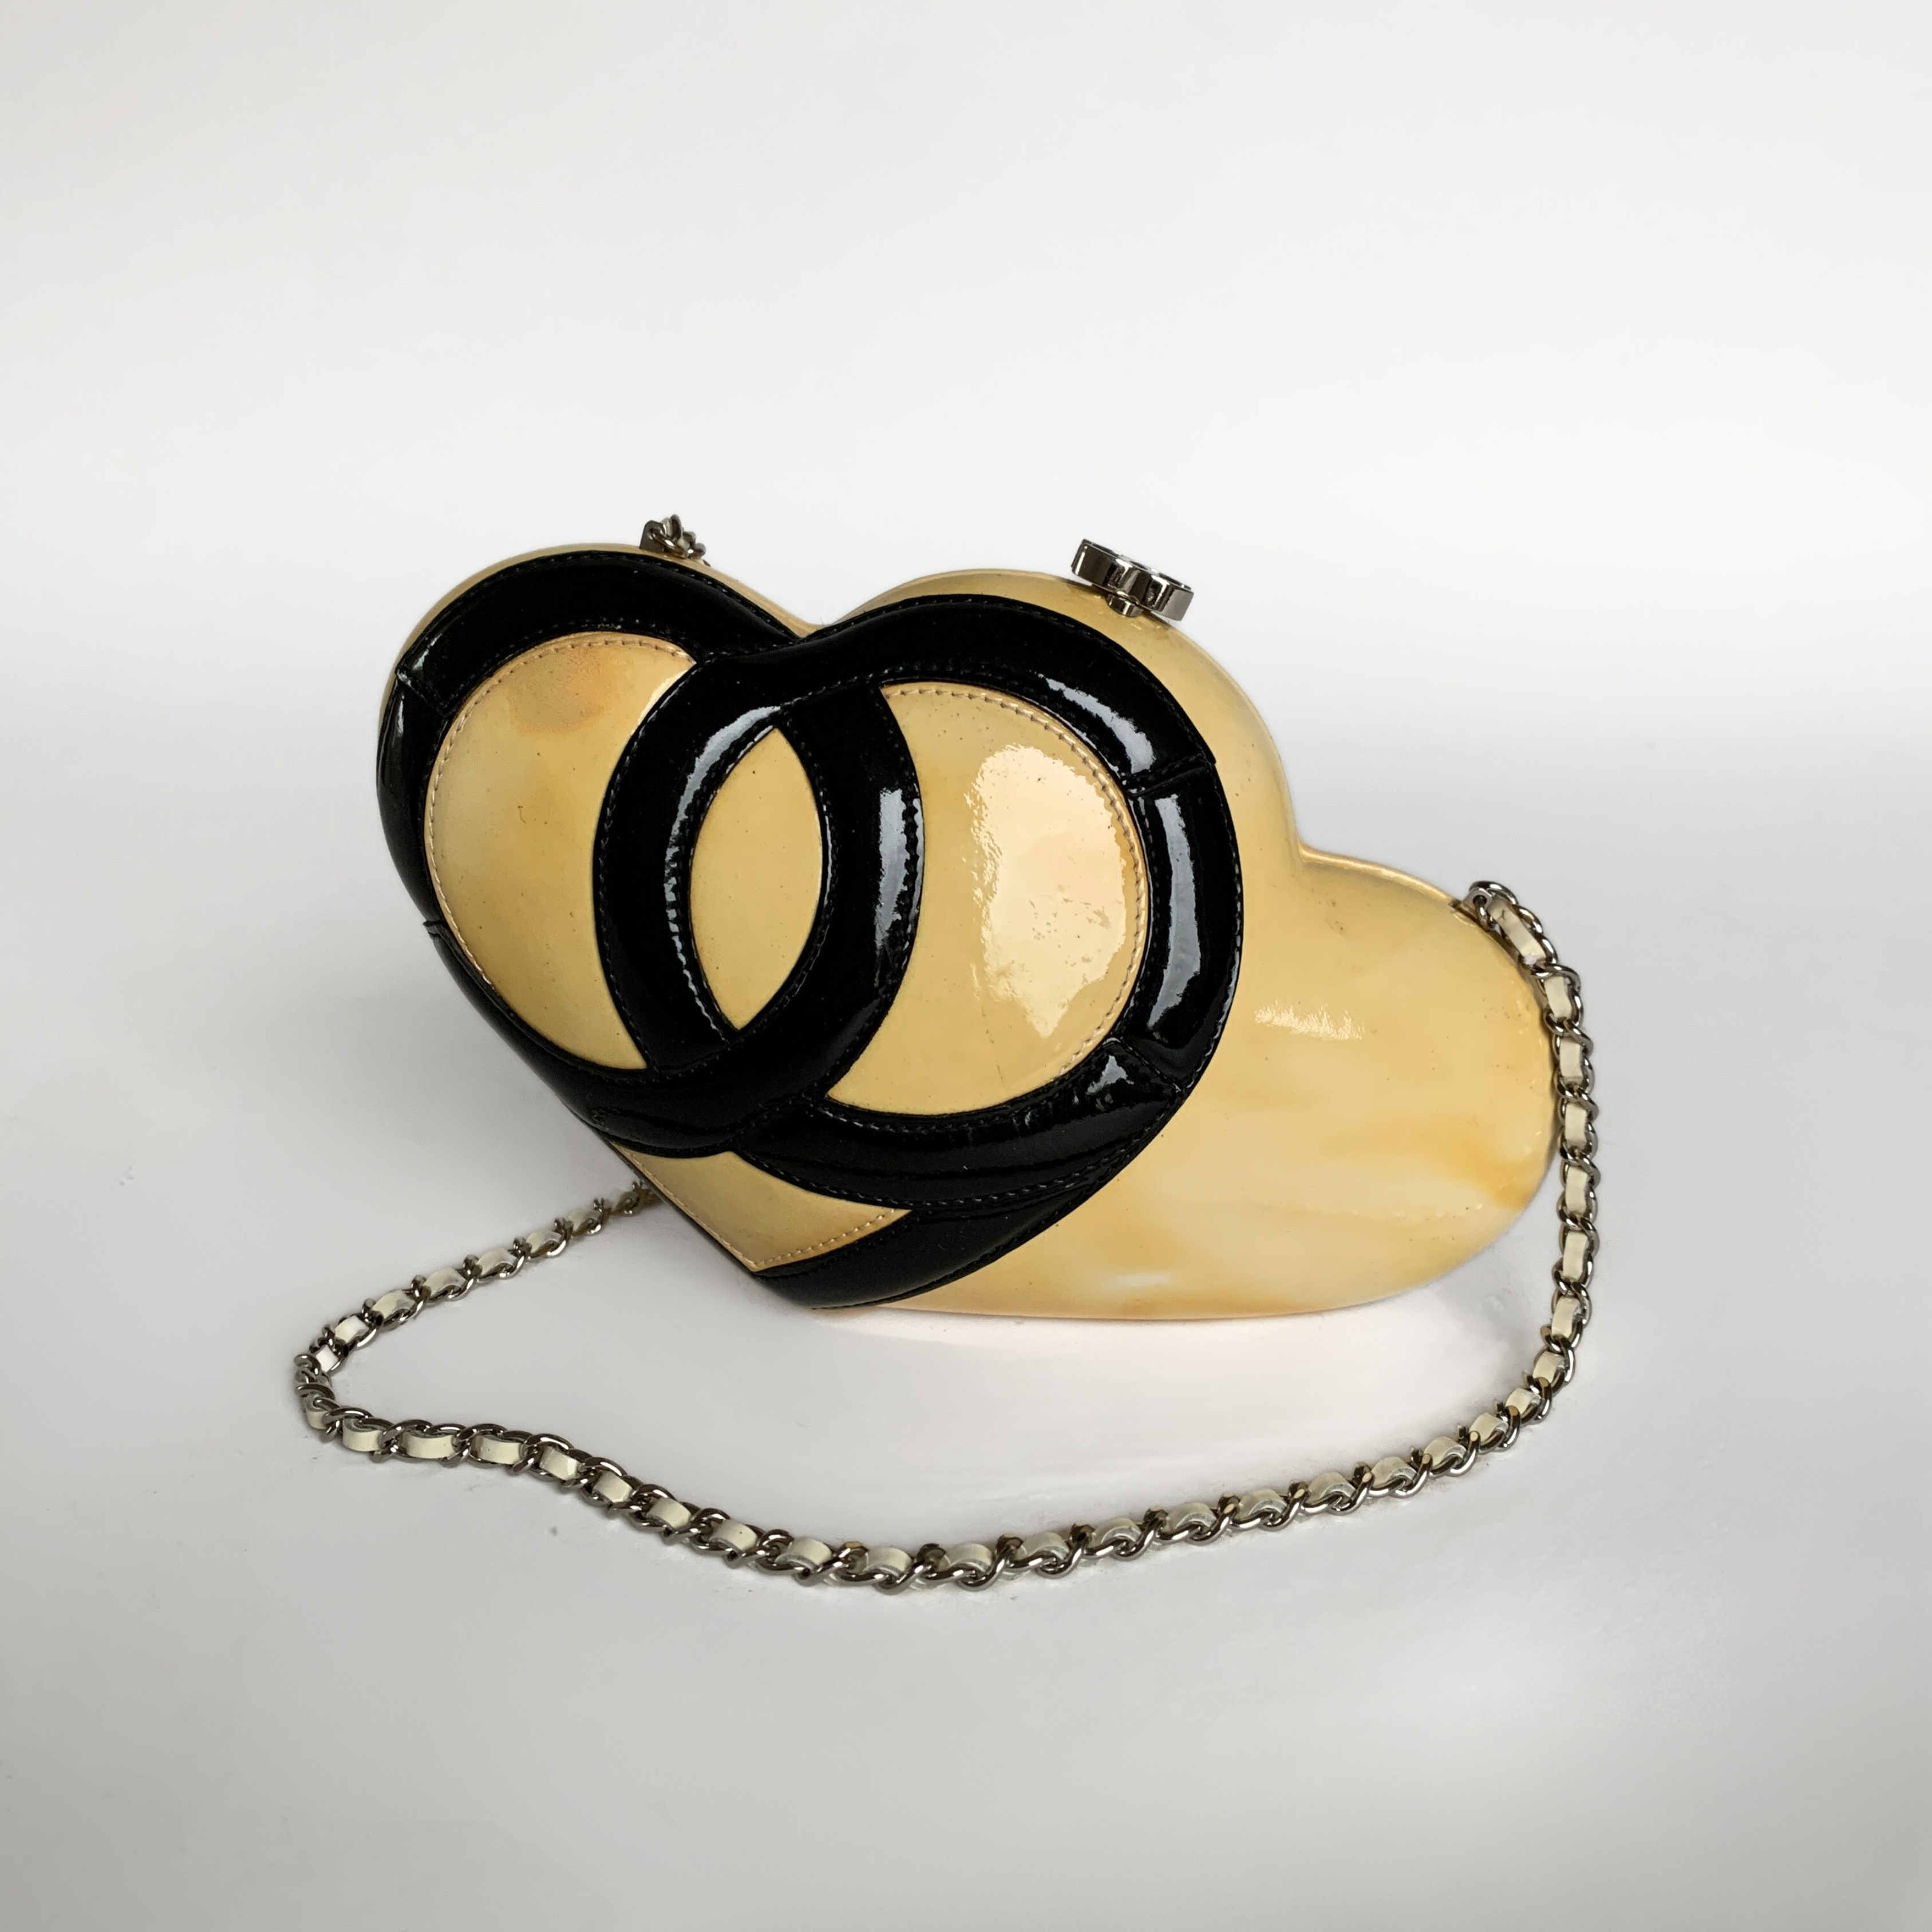 Chanel Heart Shoulder Bag Patent Leather (Limited Edition) – l